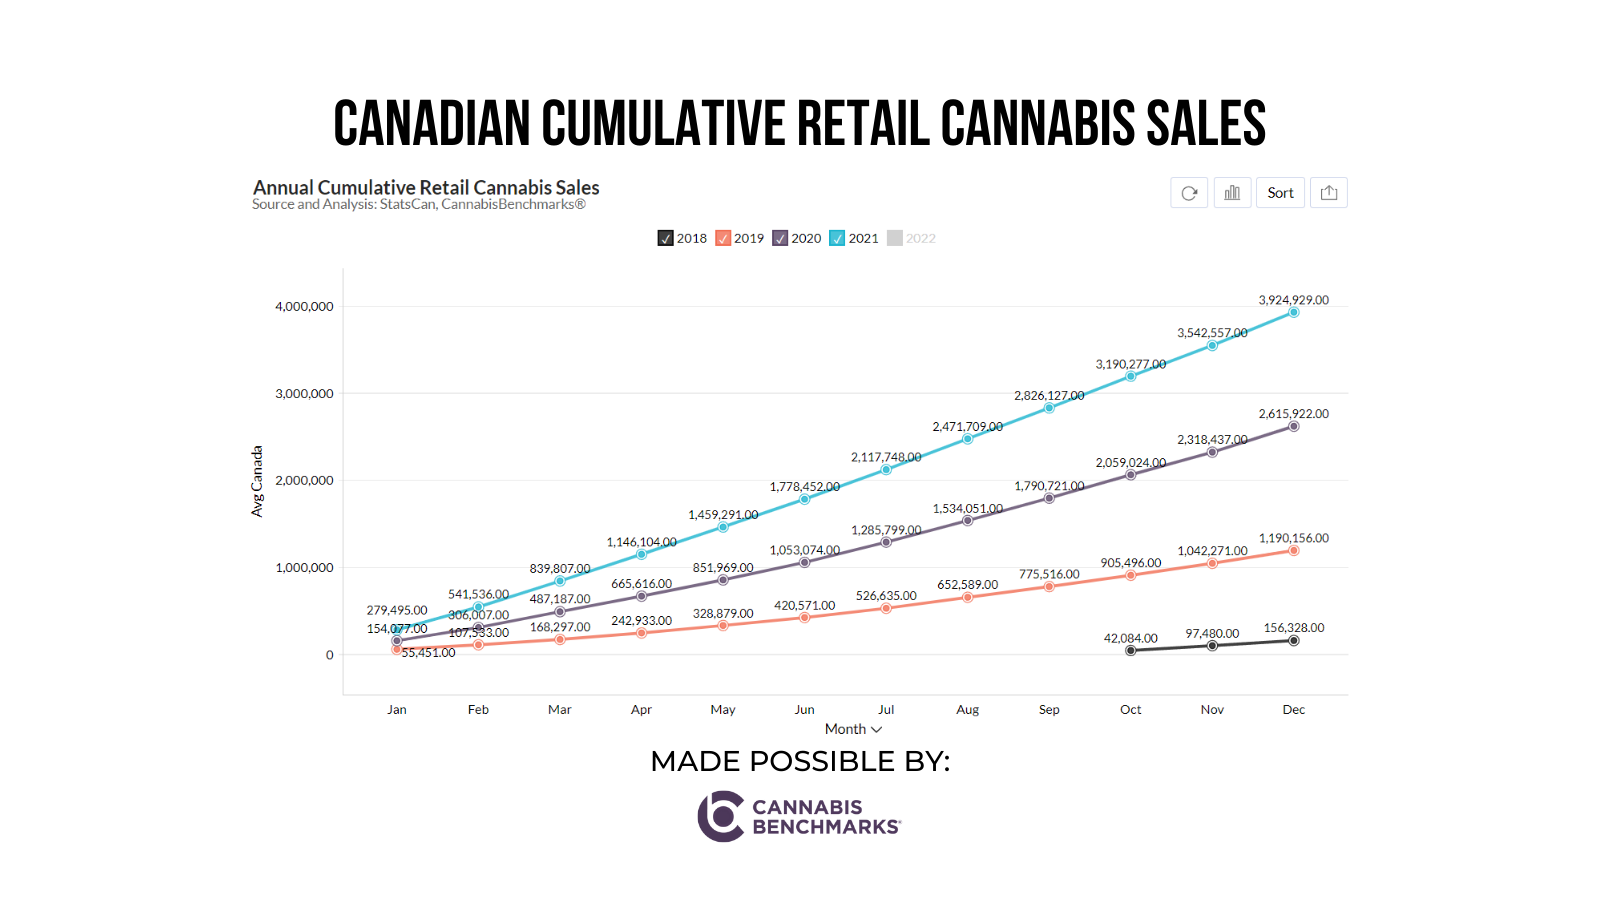 cannabis news about the cumulative cannabis sales in Canada